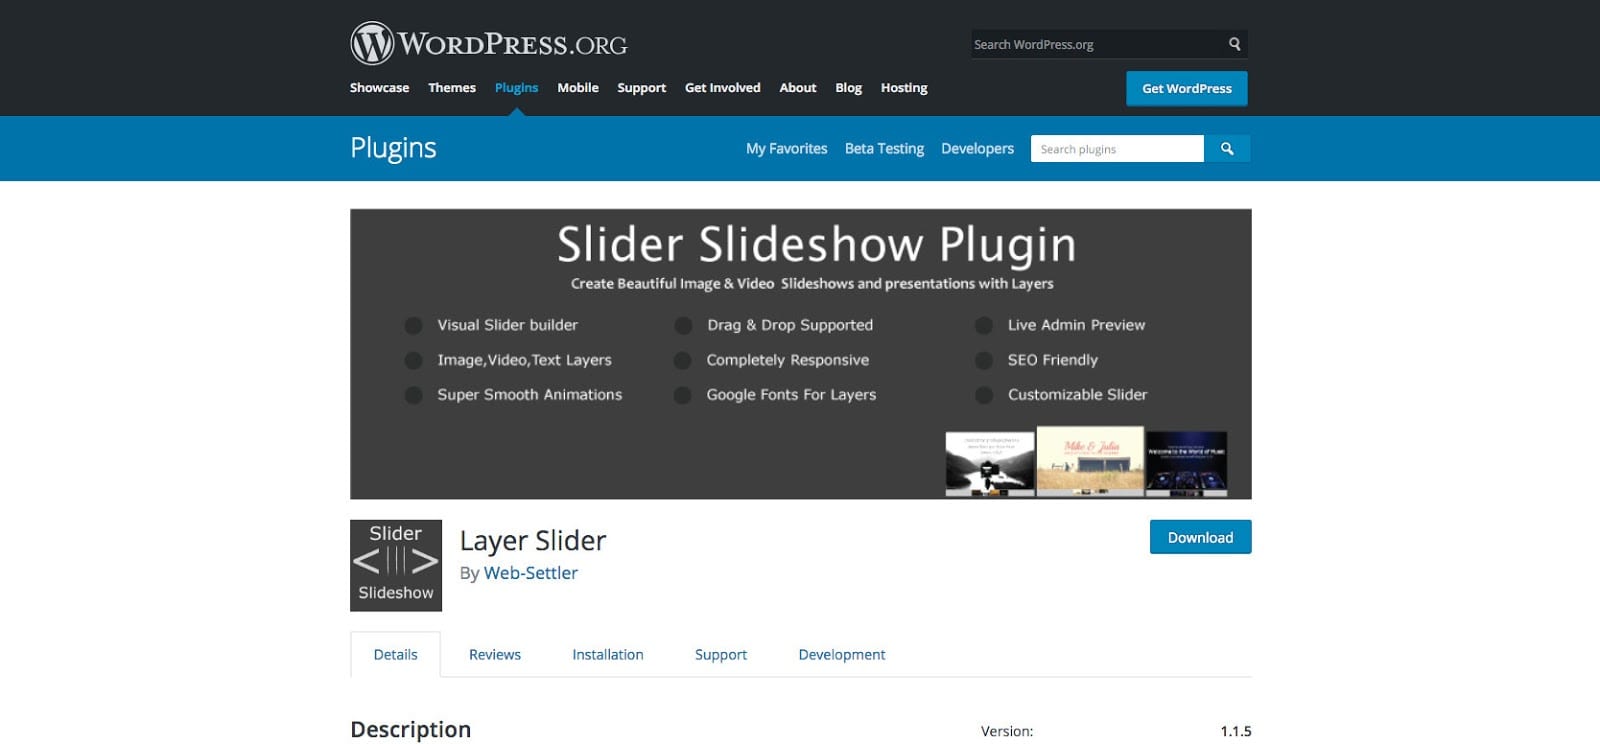 Layer Slider – WordPress plugin WordPress org